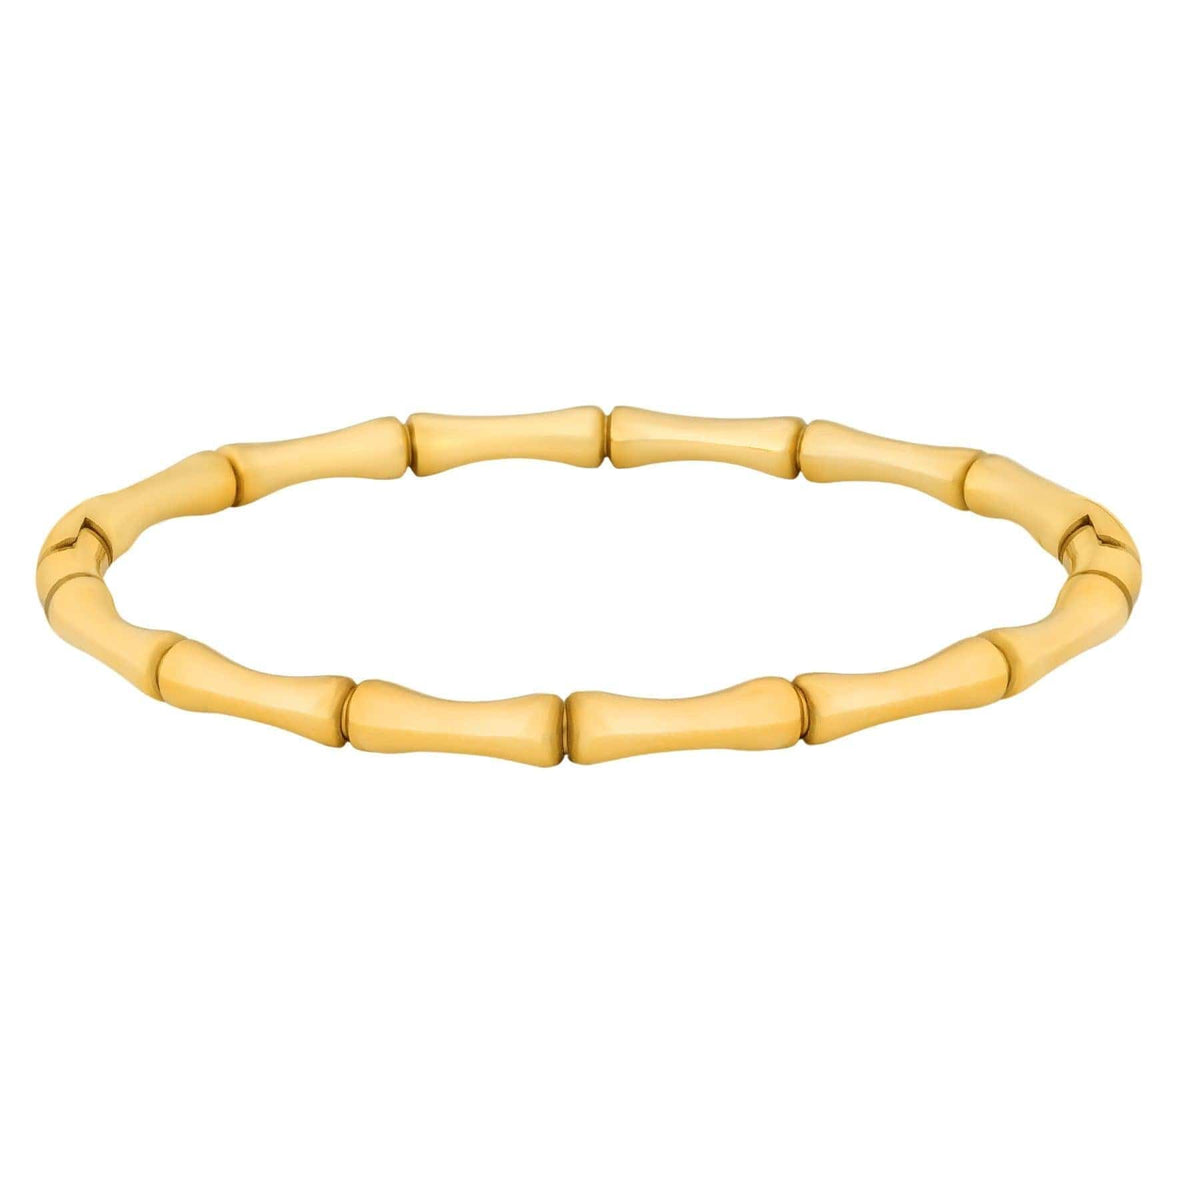 BohoMoon Stainless Steel Luella Bracelet Gold